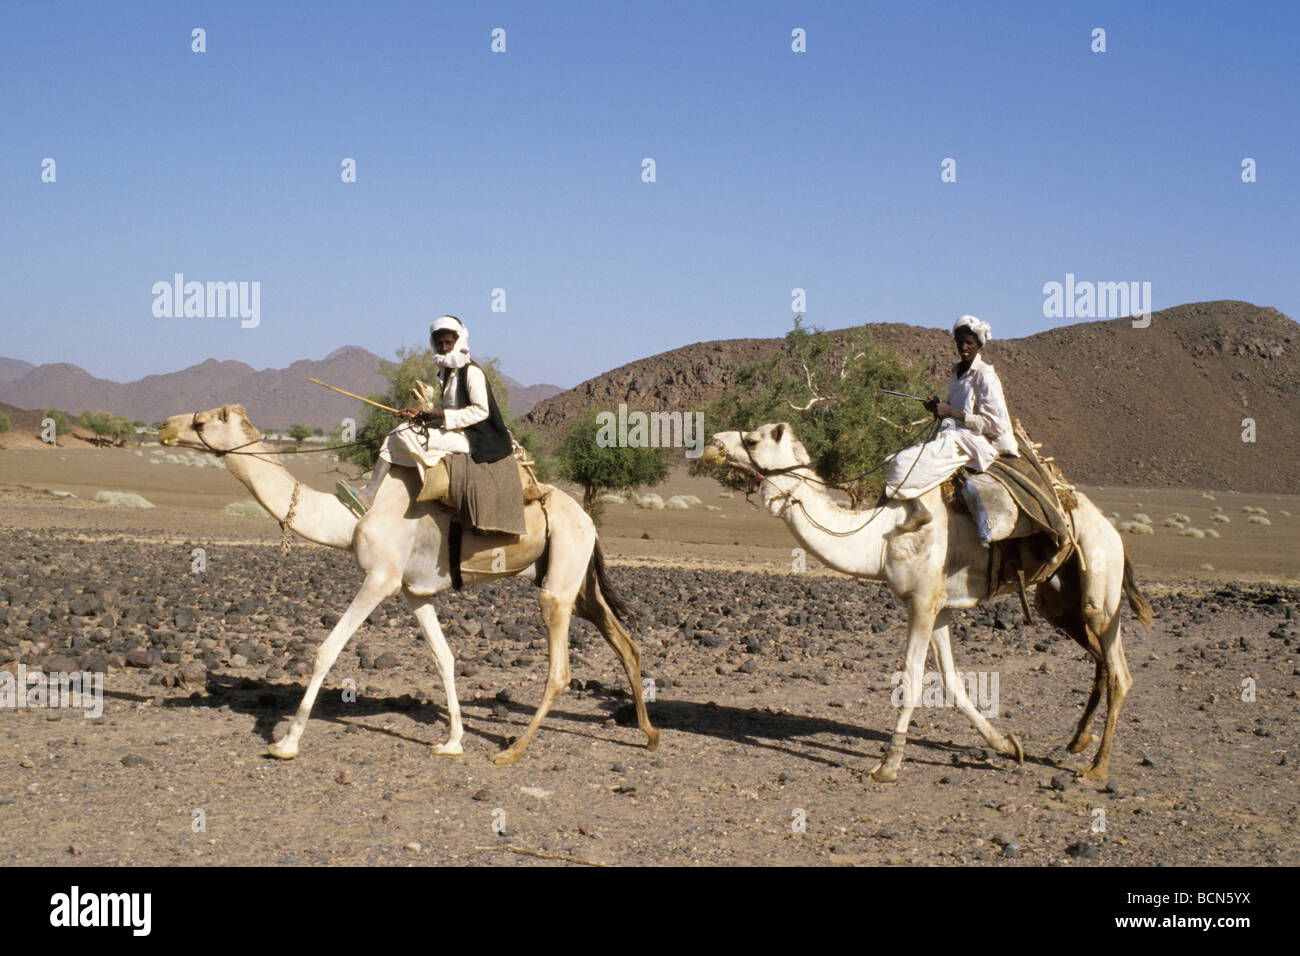 sudan nubia Bisharin Nomads atrum crater Bayuda desert Stock Photo